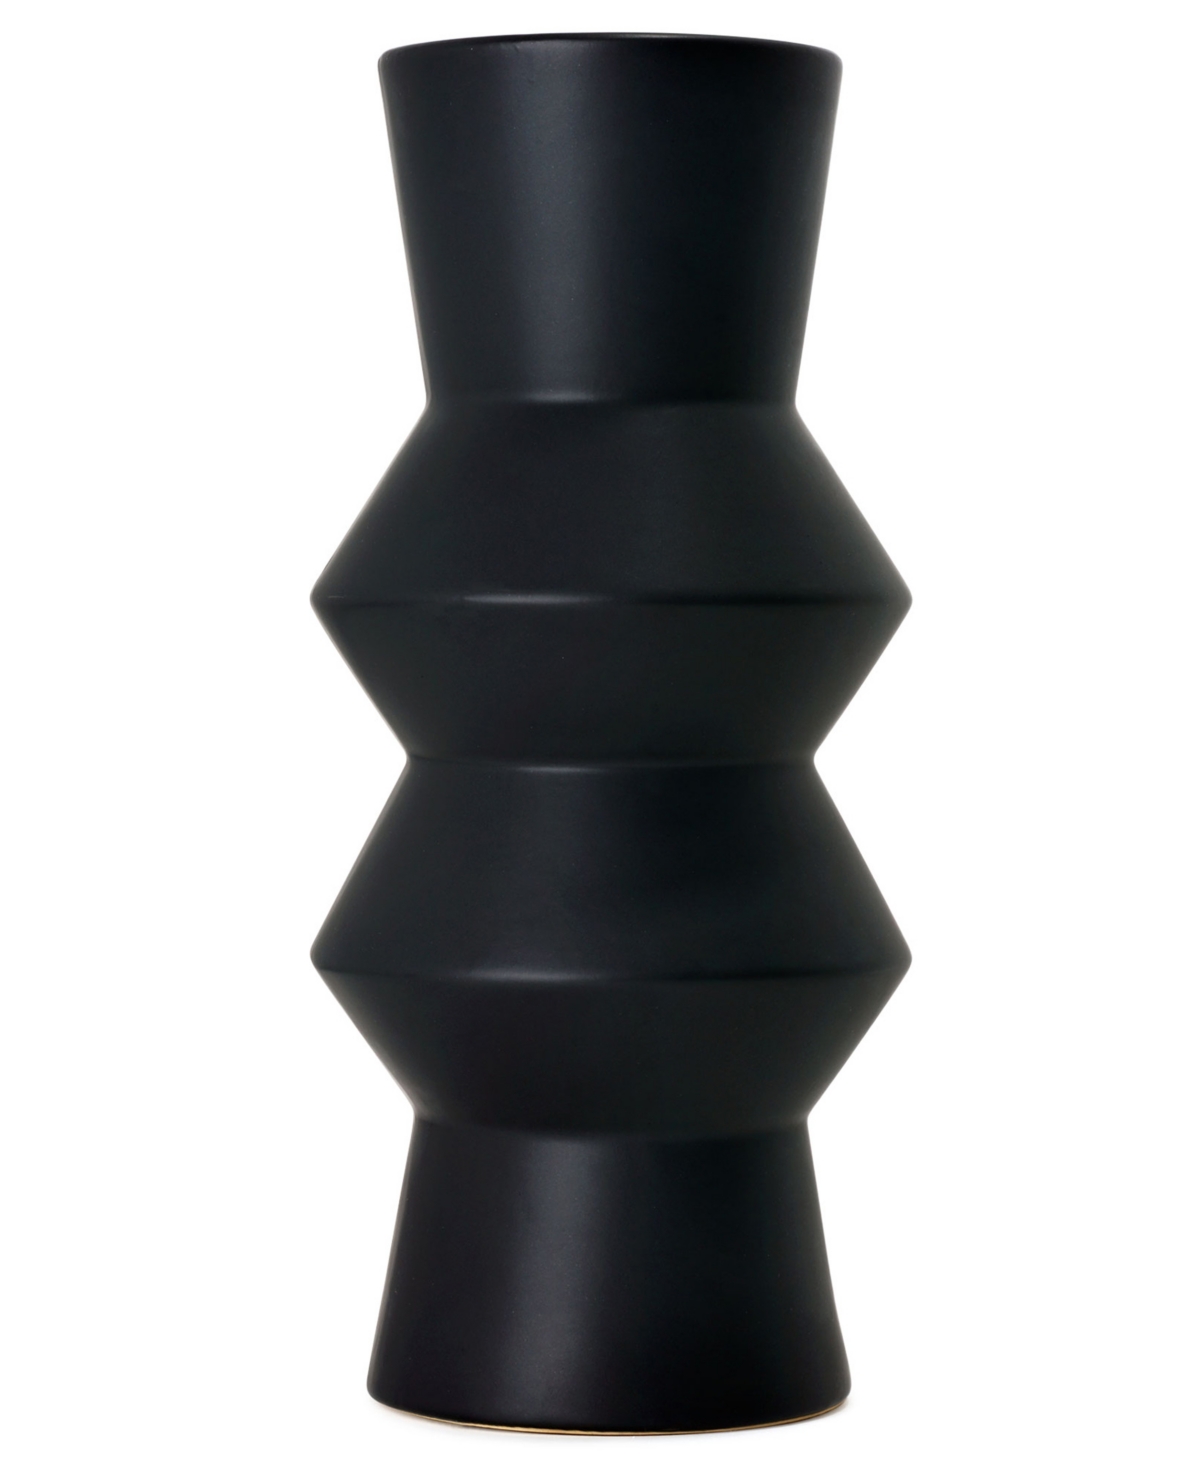 American Art Decor Contemporary Shaped Ceramic Vase, 11" In Black